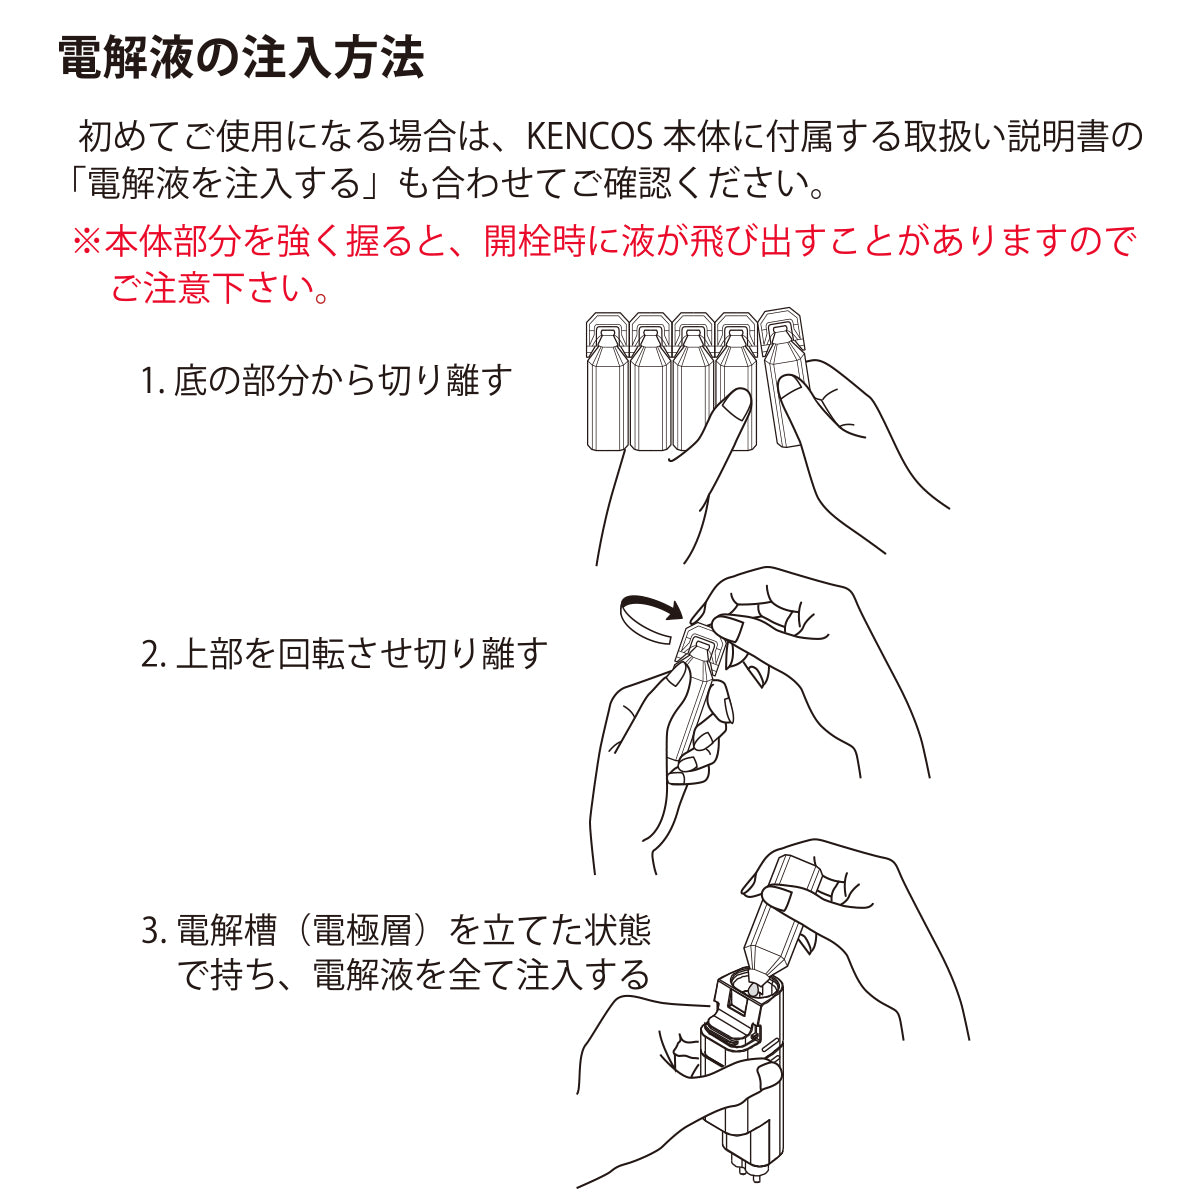 KENCOS専用電解液(使い切りタイプ)